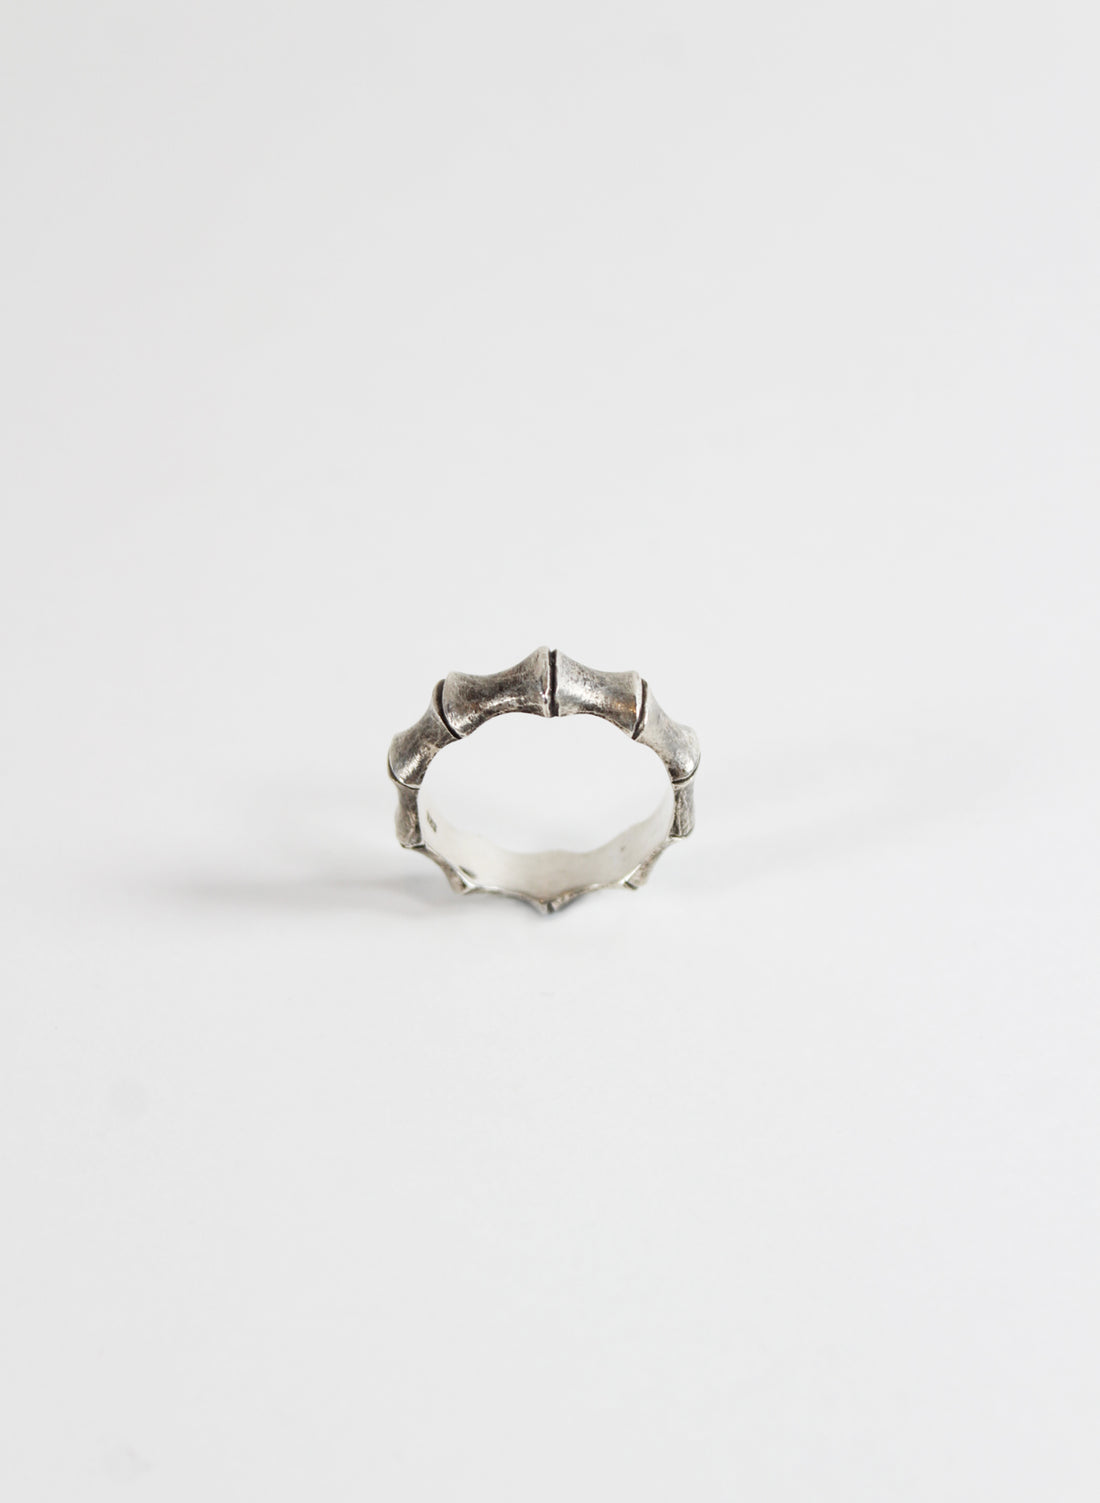 Tuaiwi (10 Segment) - Sterling Silver Ring